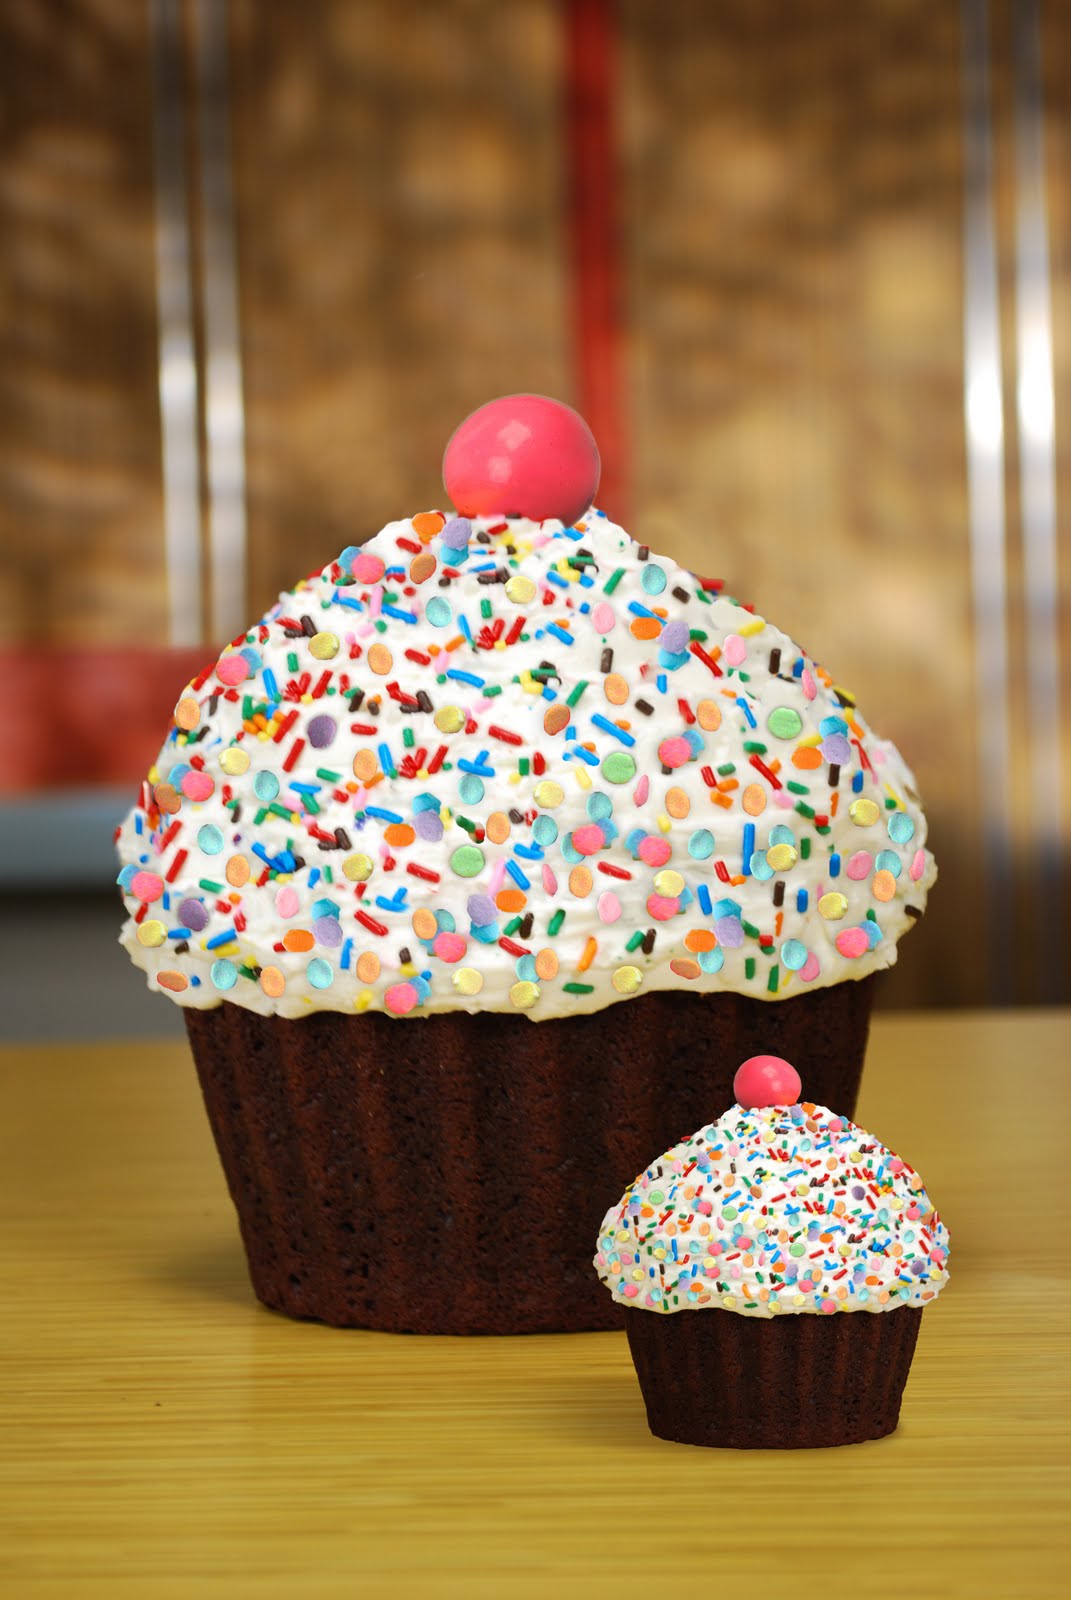 easy cupcake designs | Cupcakes!